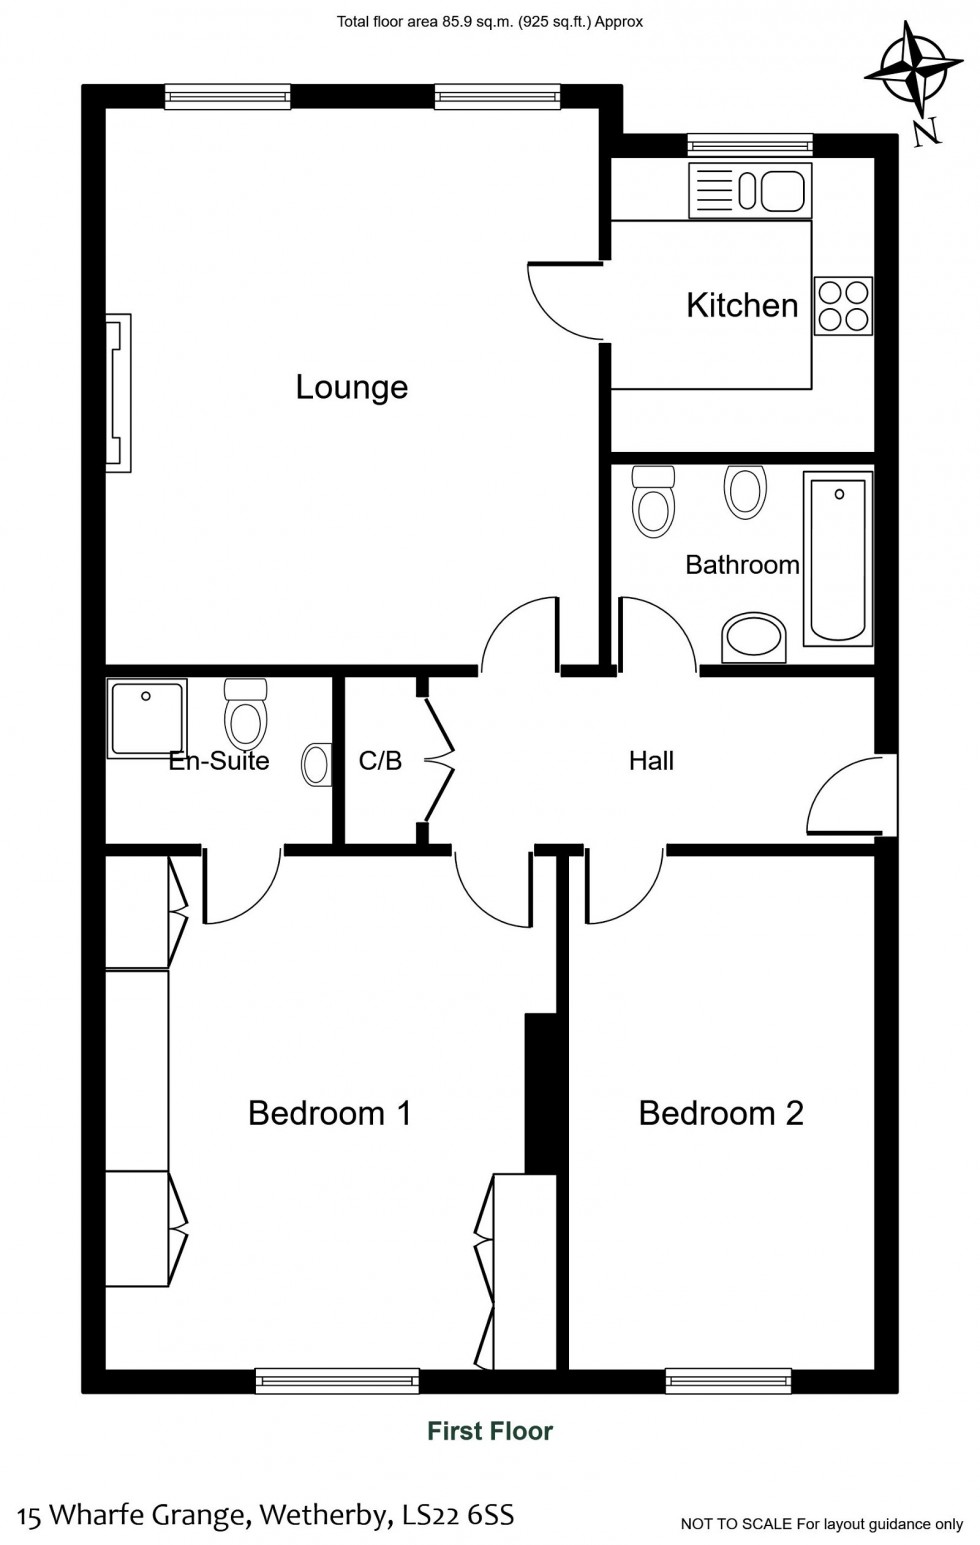 Floorplan for Wetherby, Wharfe Grange, LS22